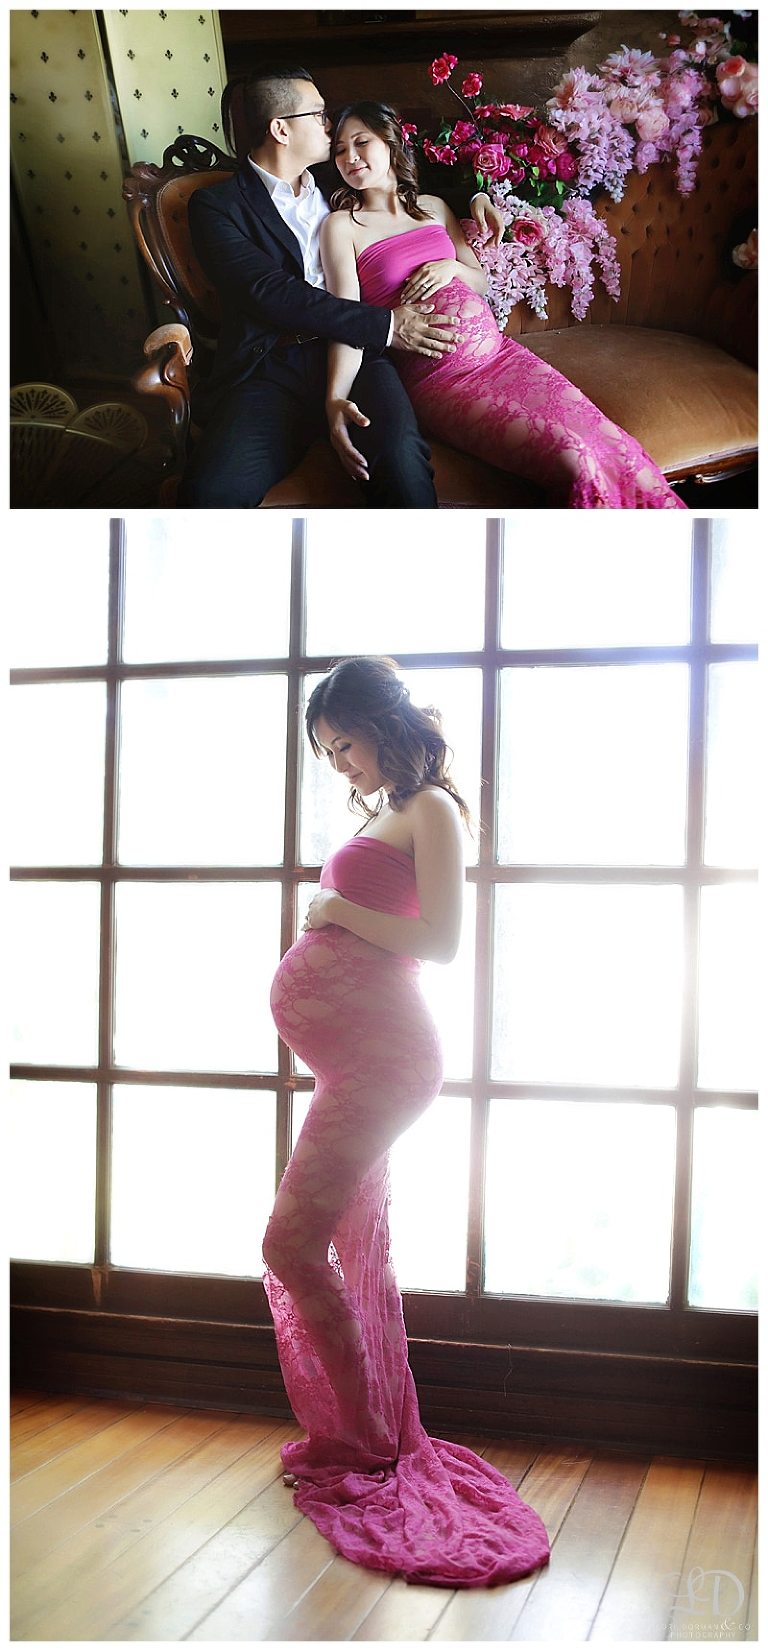 sweet maternity photoshoot-lori dorman photography-maternity boudoir-professional photographer_5880.jpg